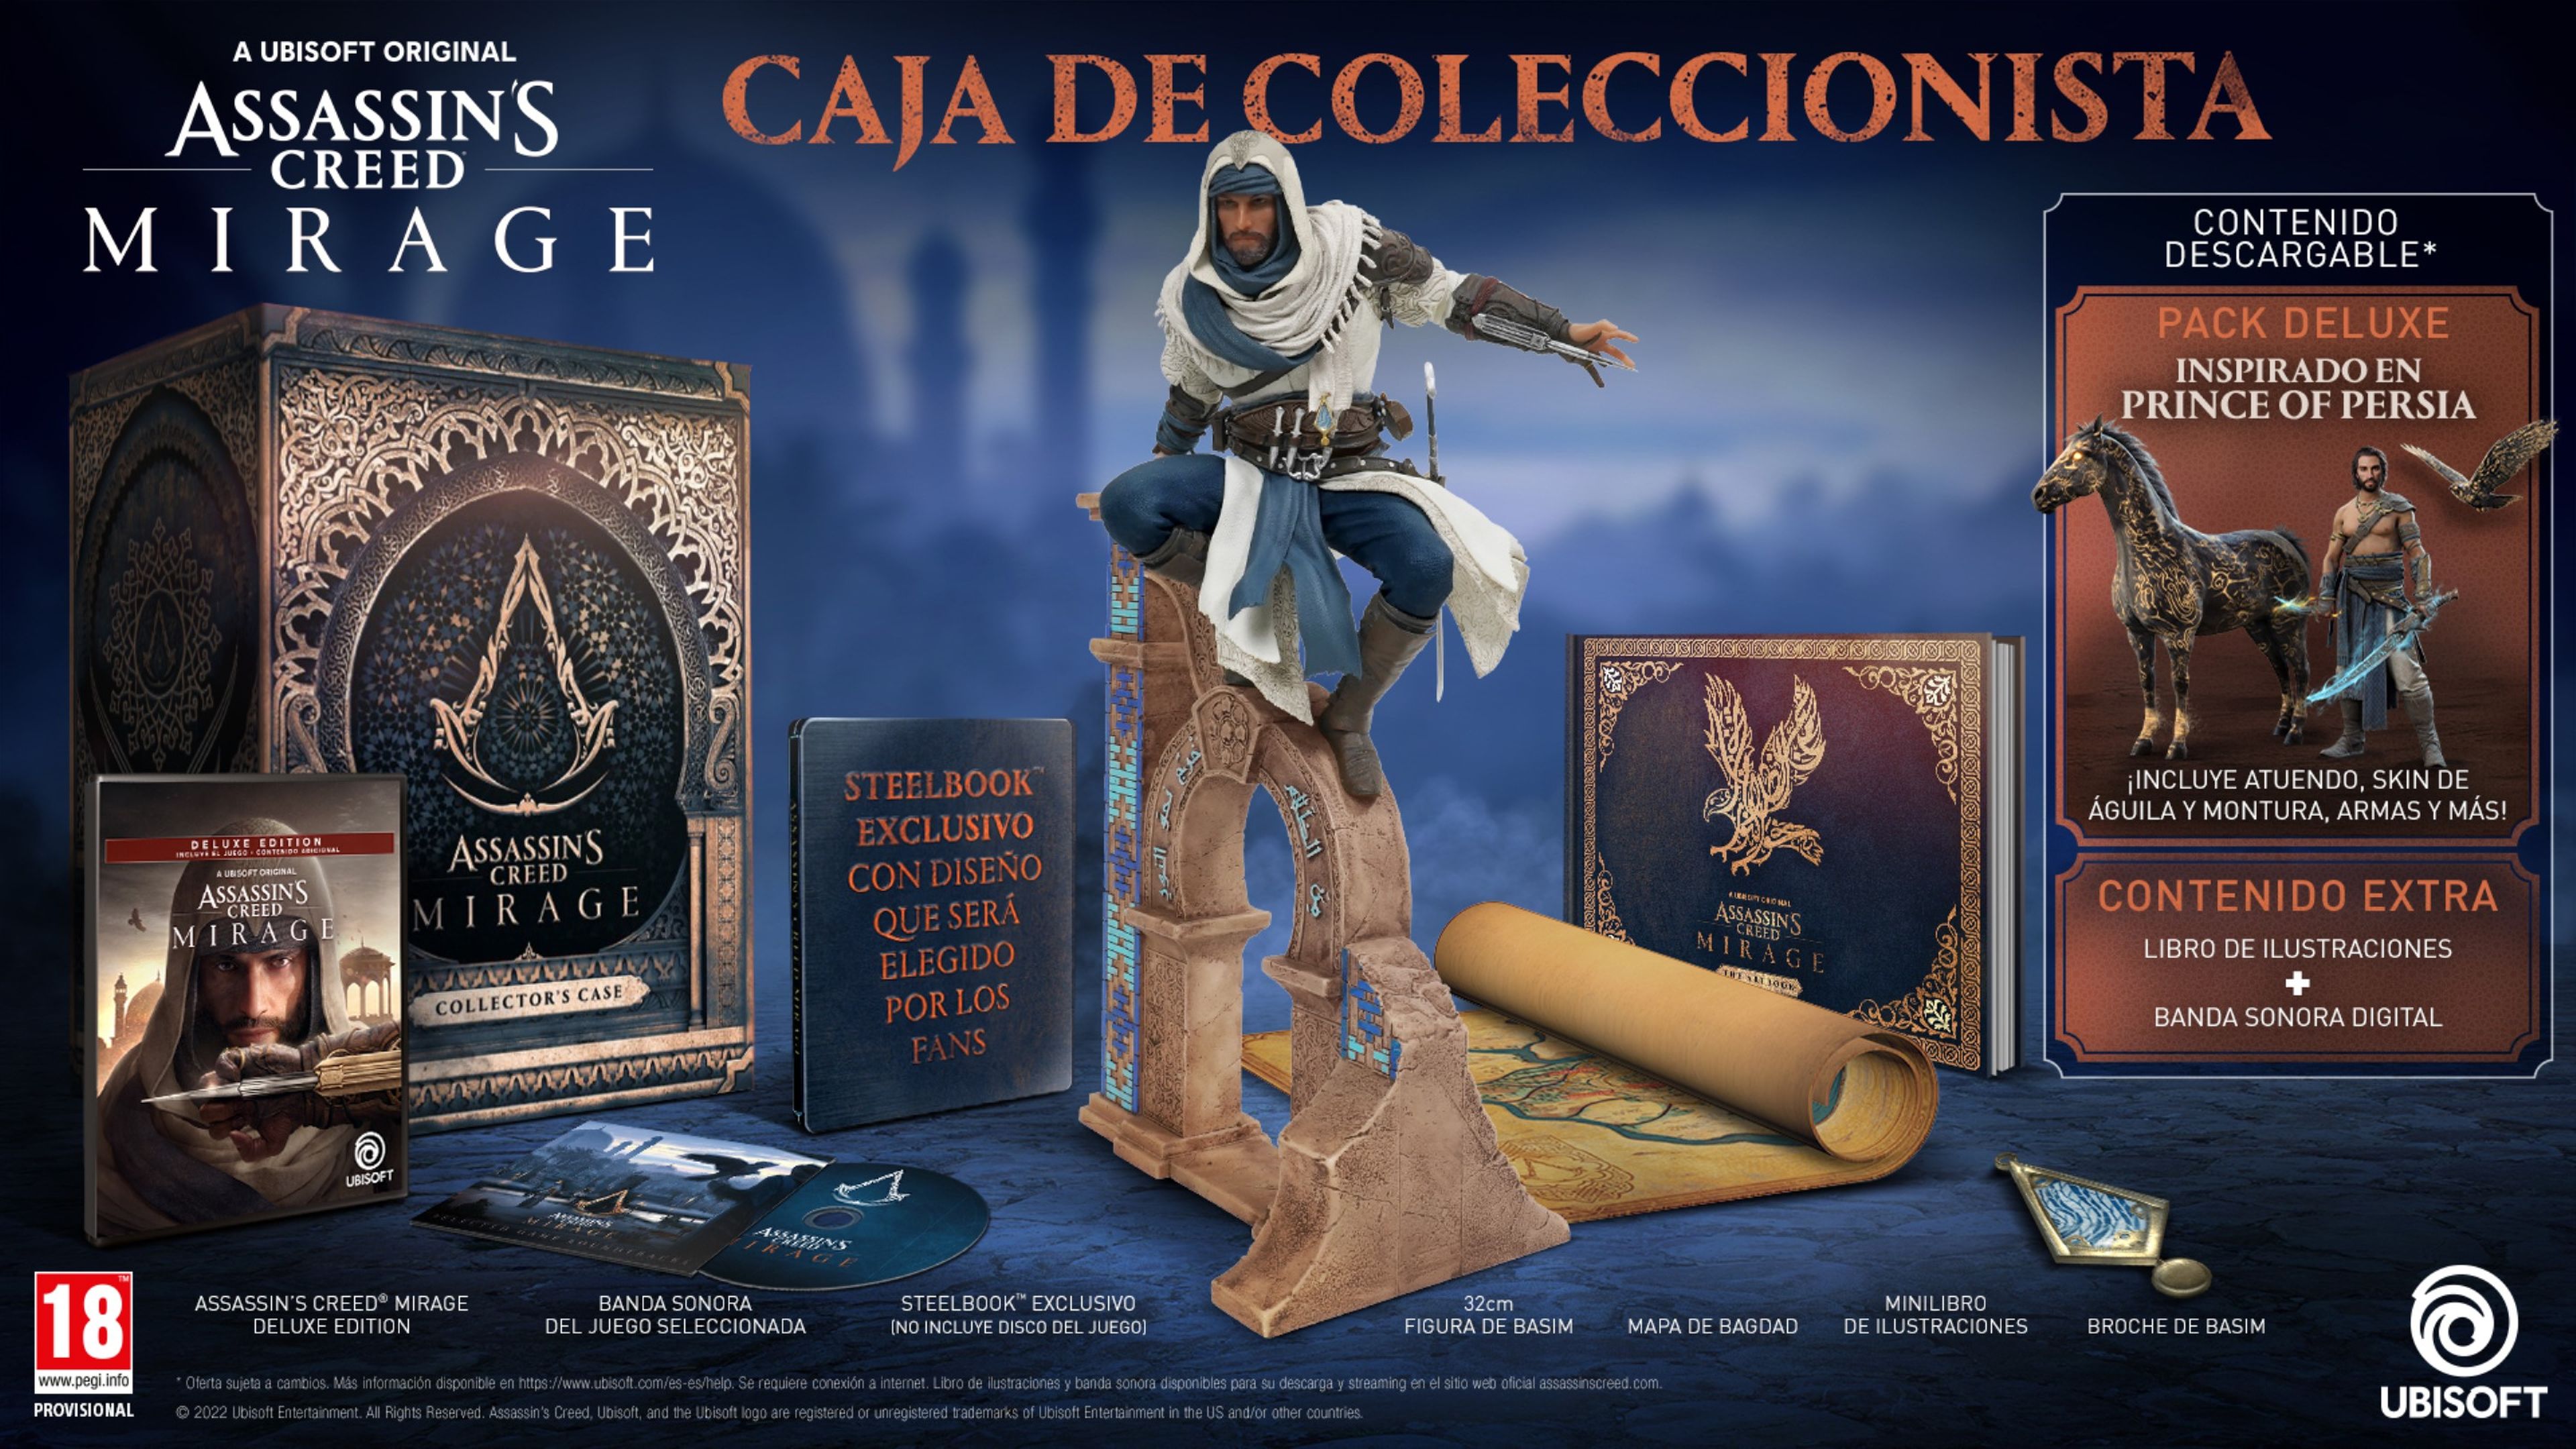 Assassin's Creed Mirage - Caja de Coleccionista